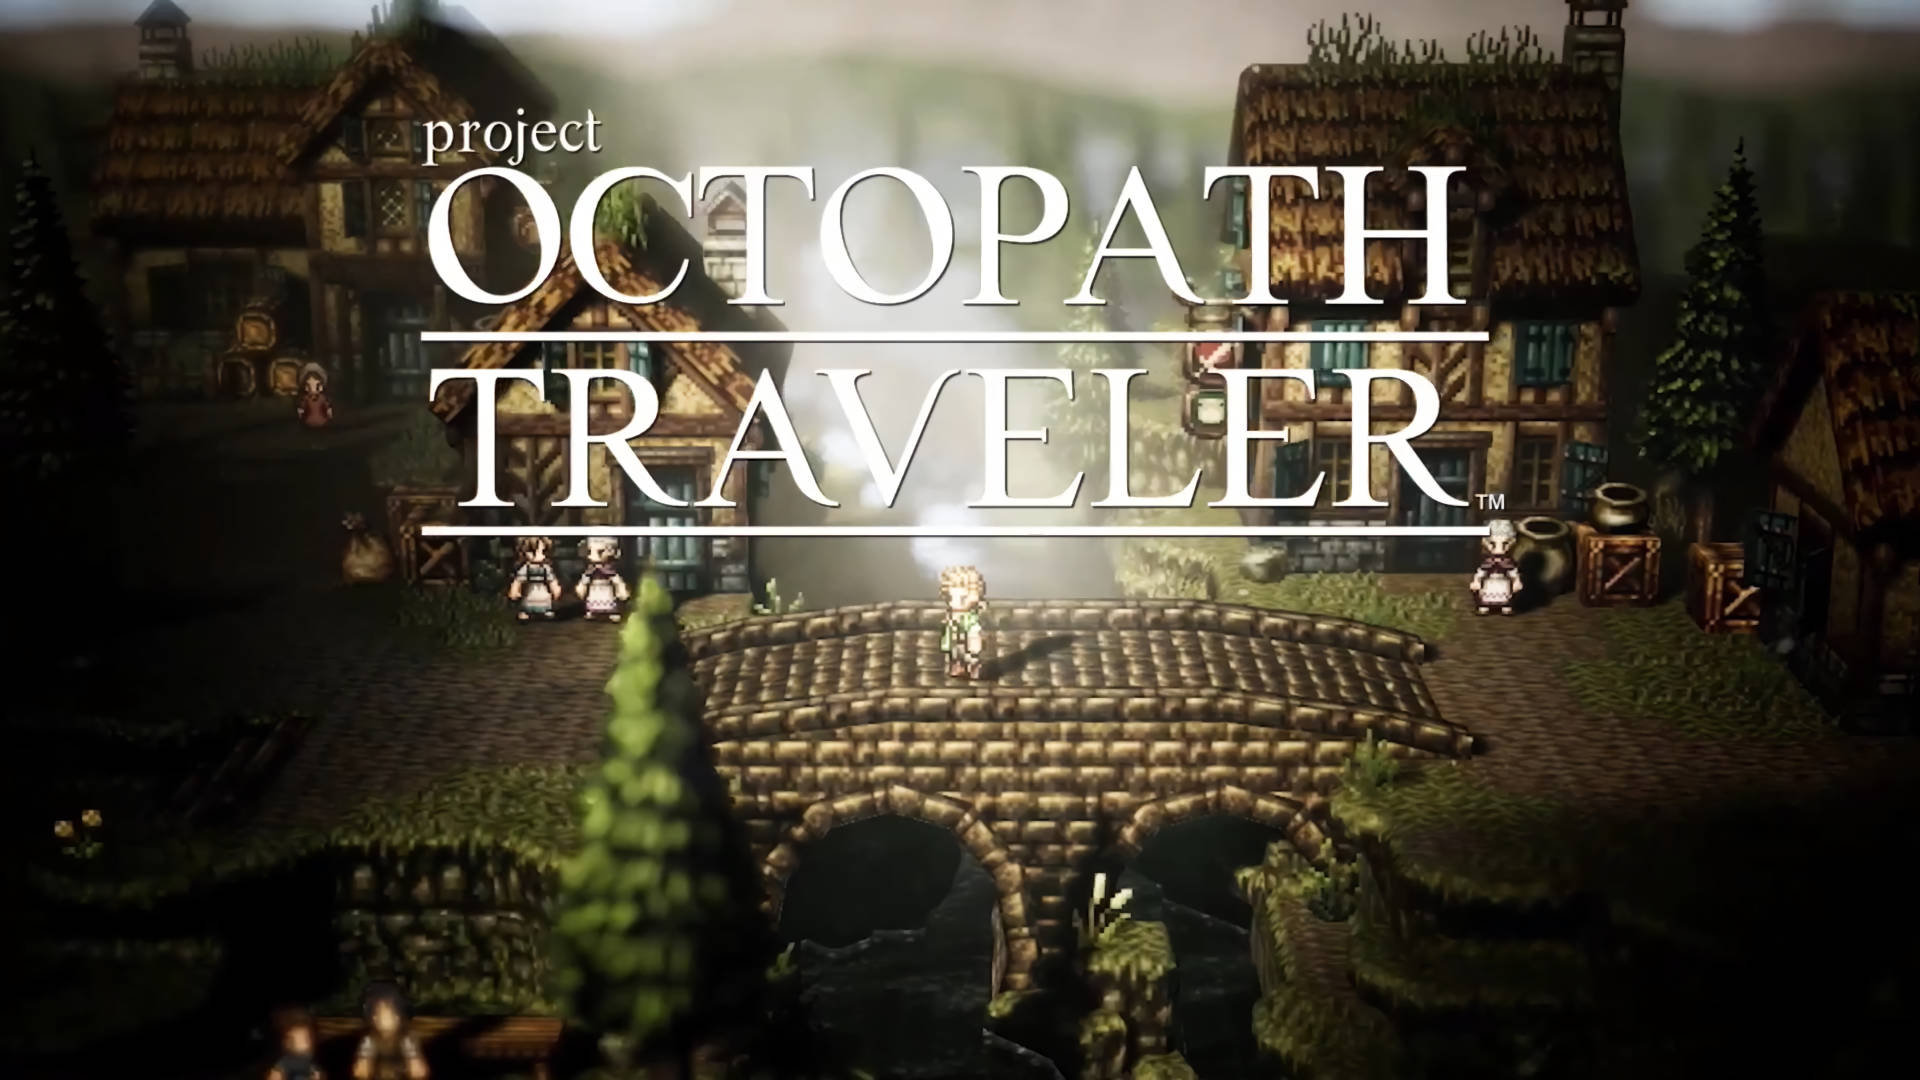 Octopath Traveler Game Poster Wallpaper